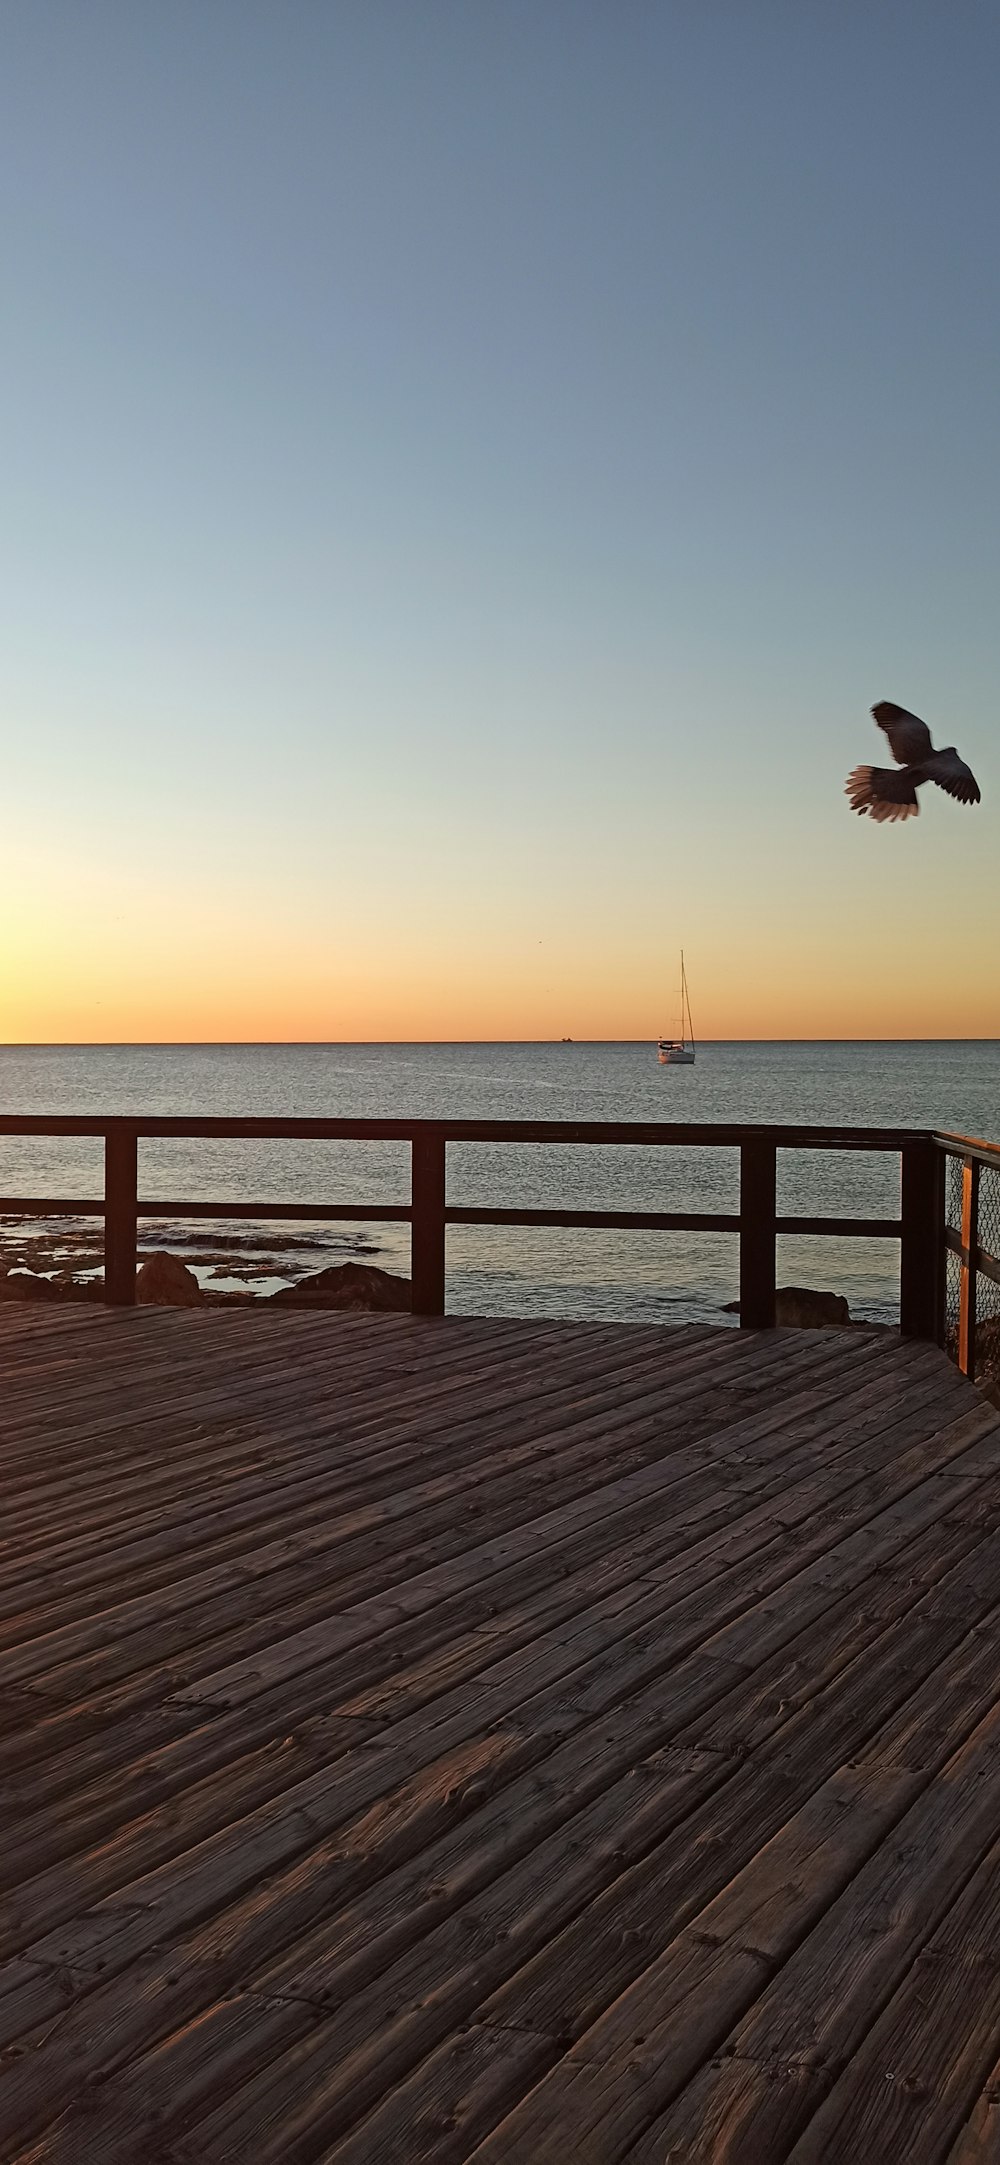 a bird flying over a wooden pier next to the ocean